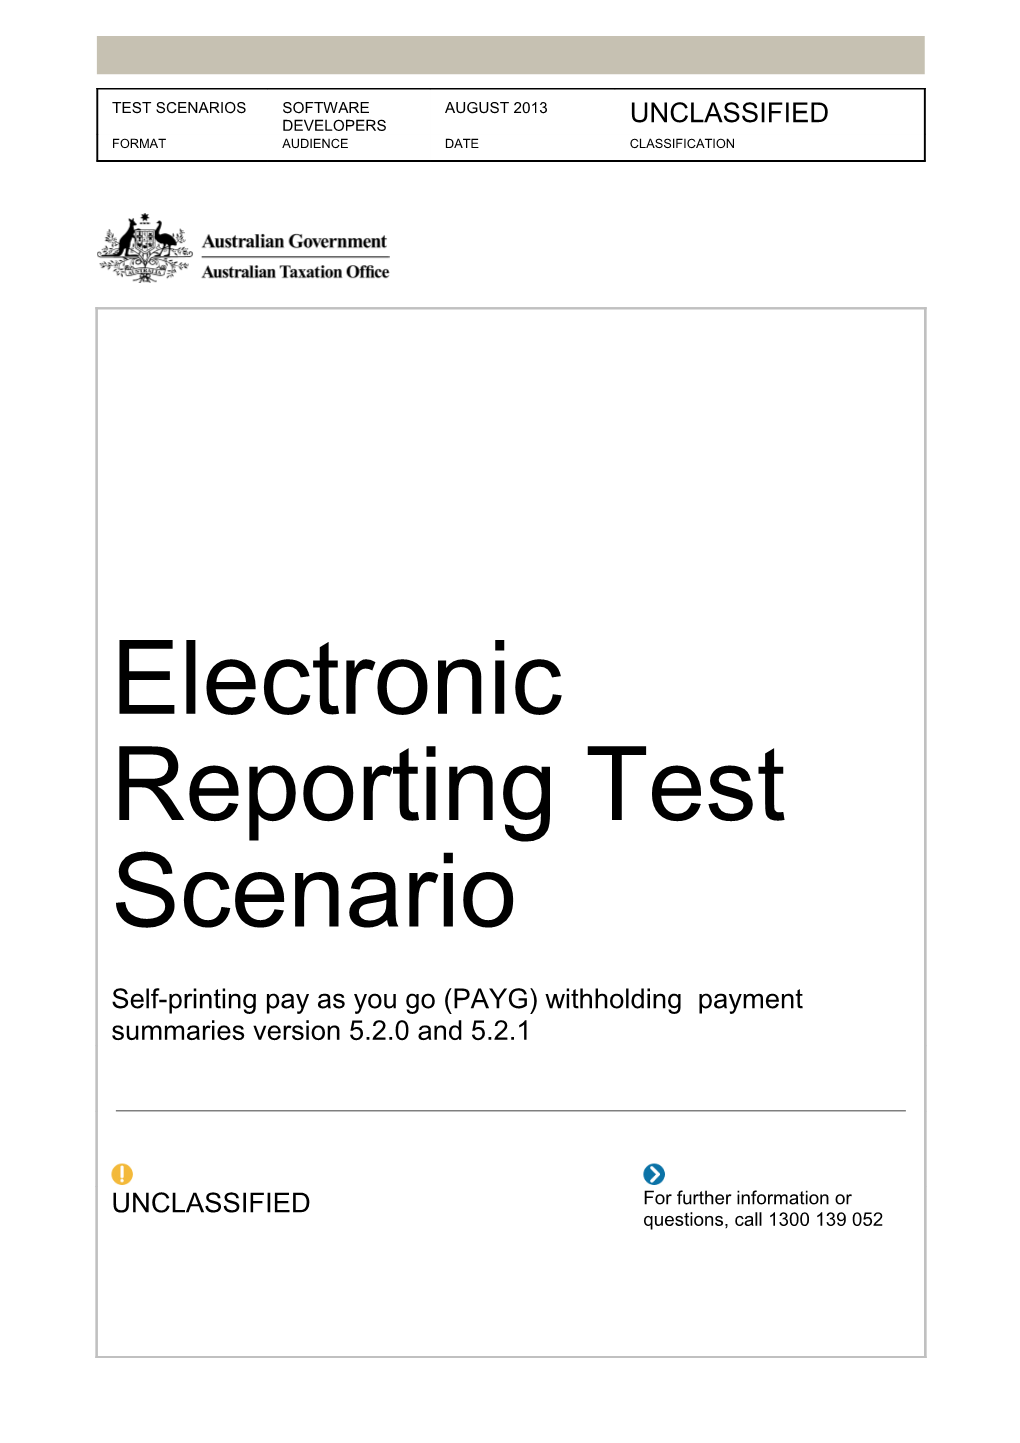 Self Printing Payg Withholding Payment Summaries Version 5.1 Test Scenario